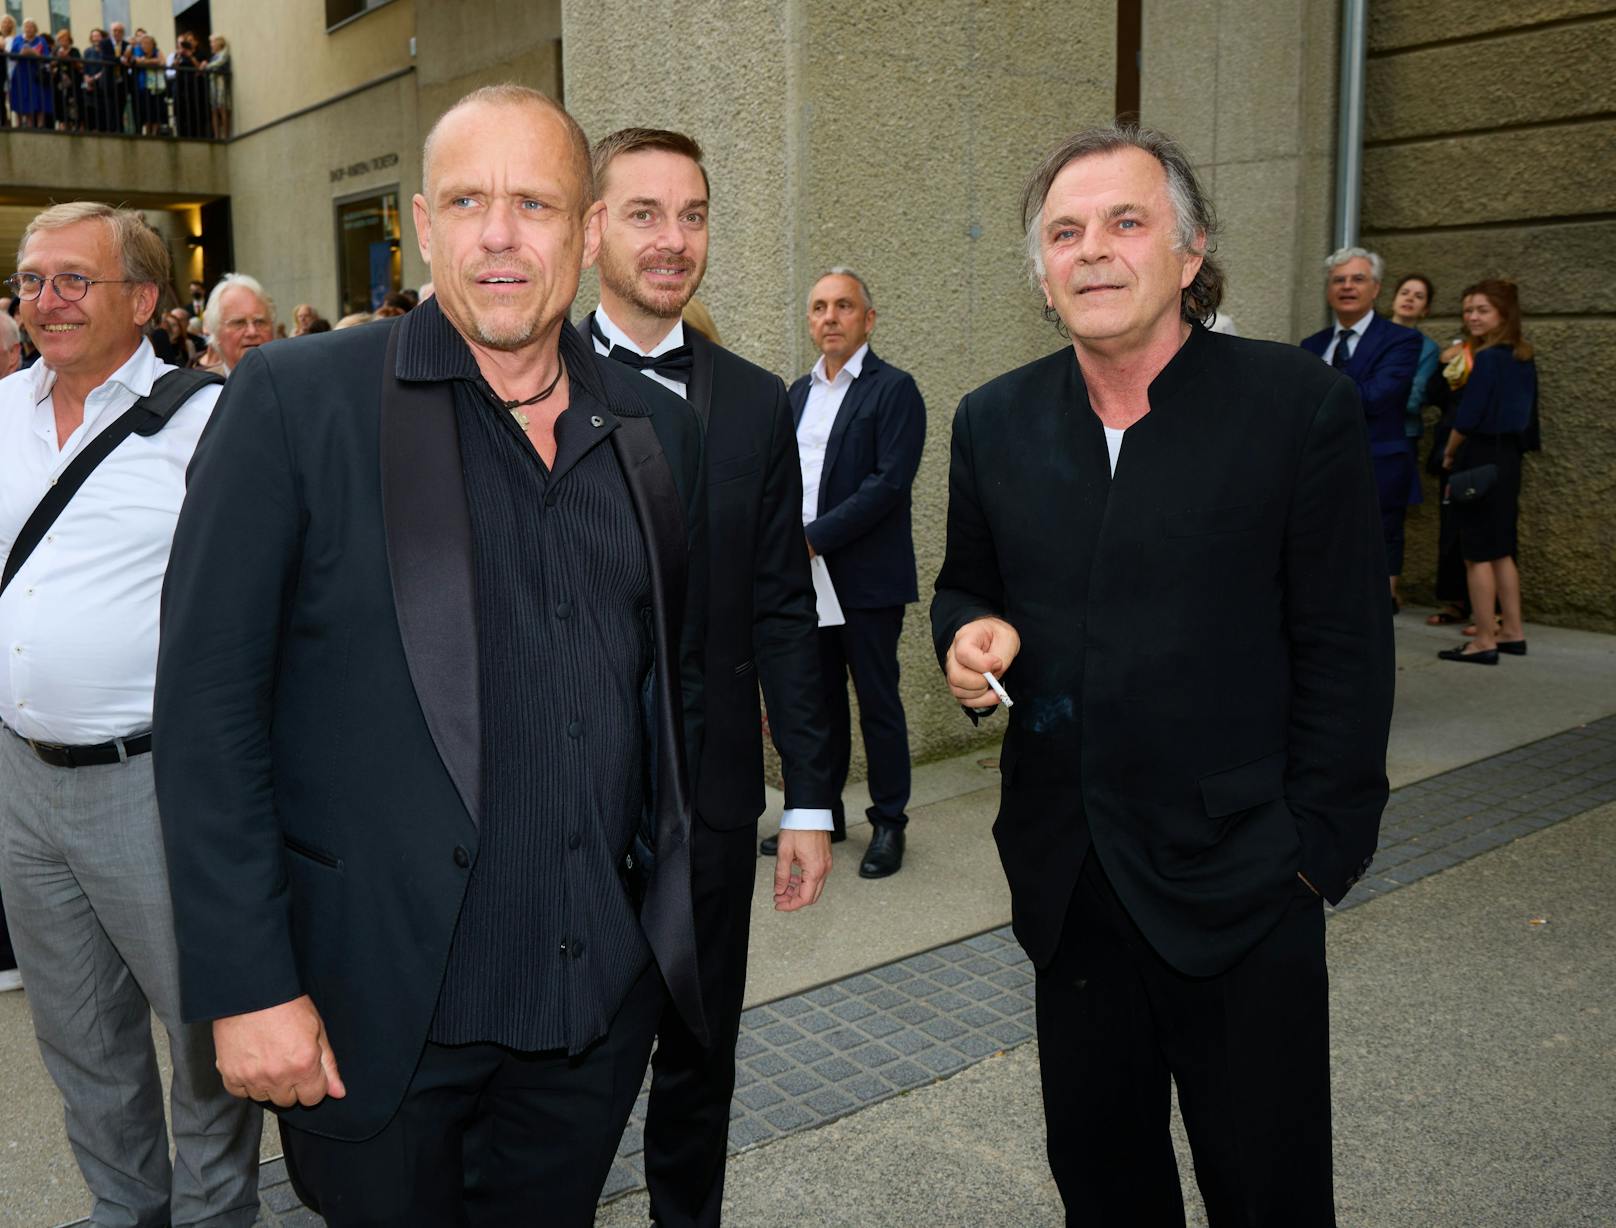 Kunstliebhaber Gery Keszler neben Kulturmanager und Pianist Markus Hinterhäuser.